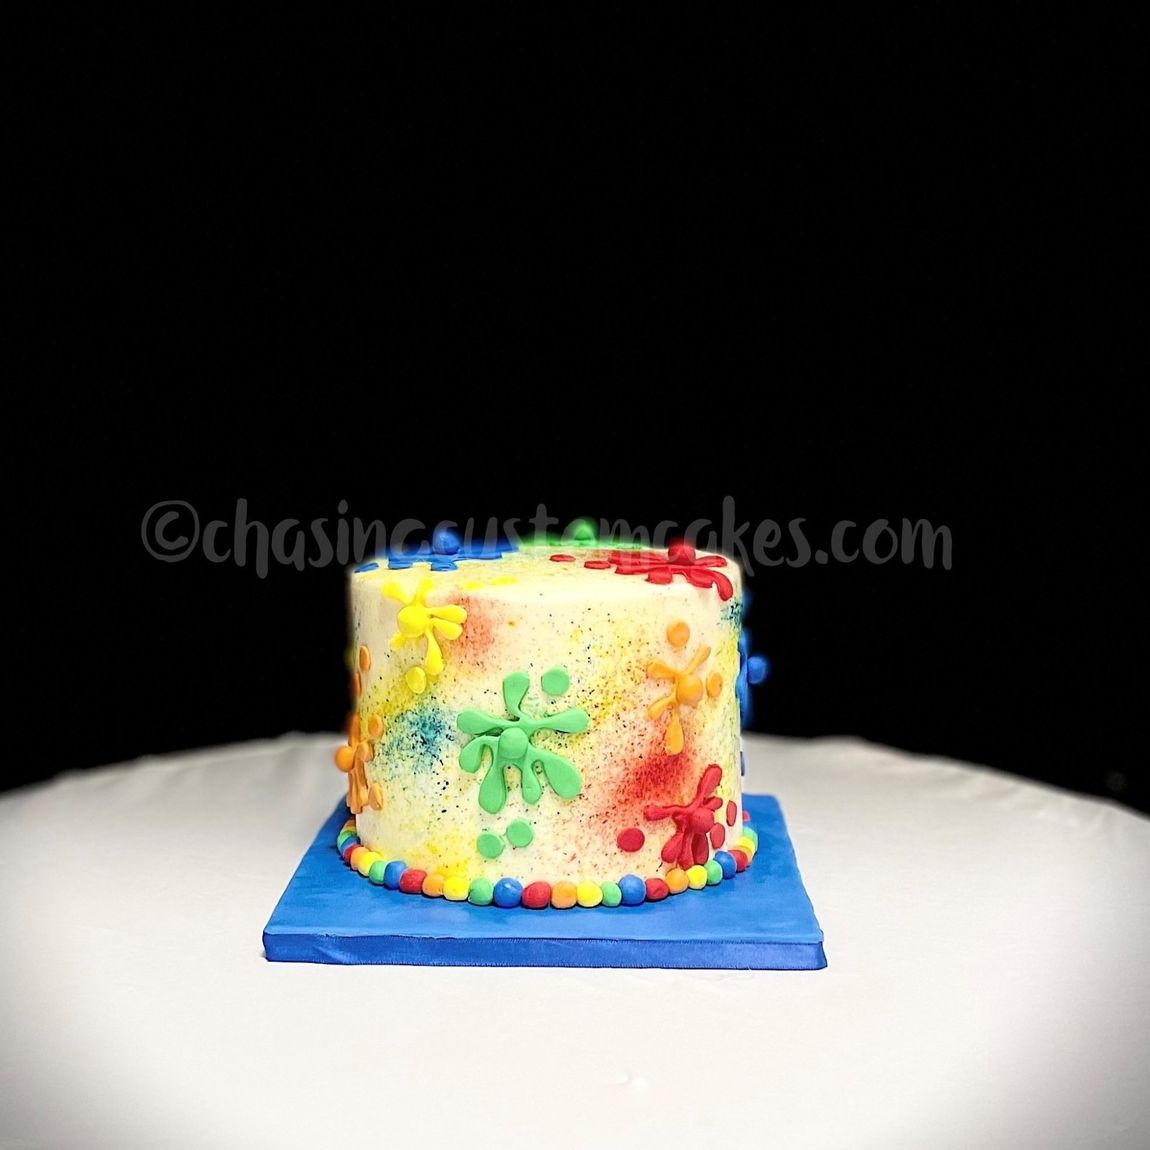 Paintball cake